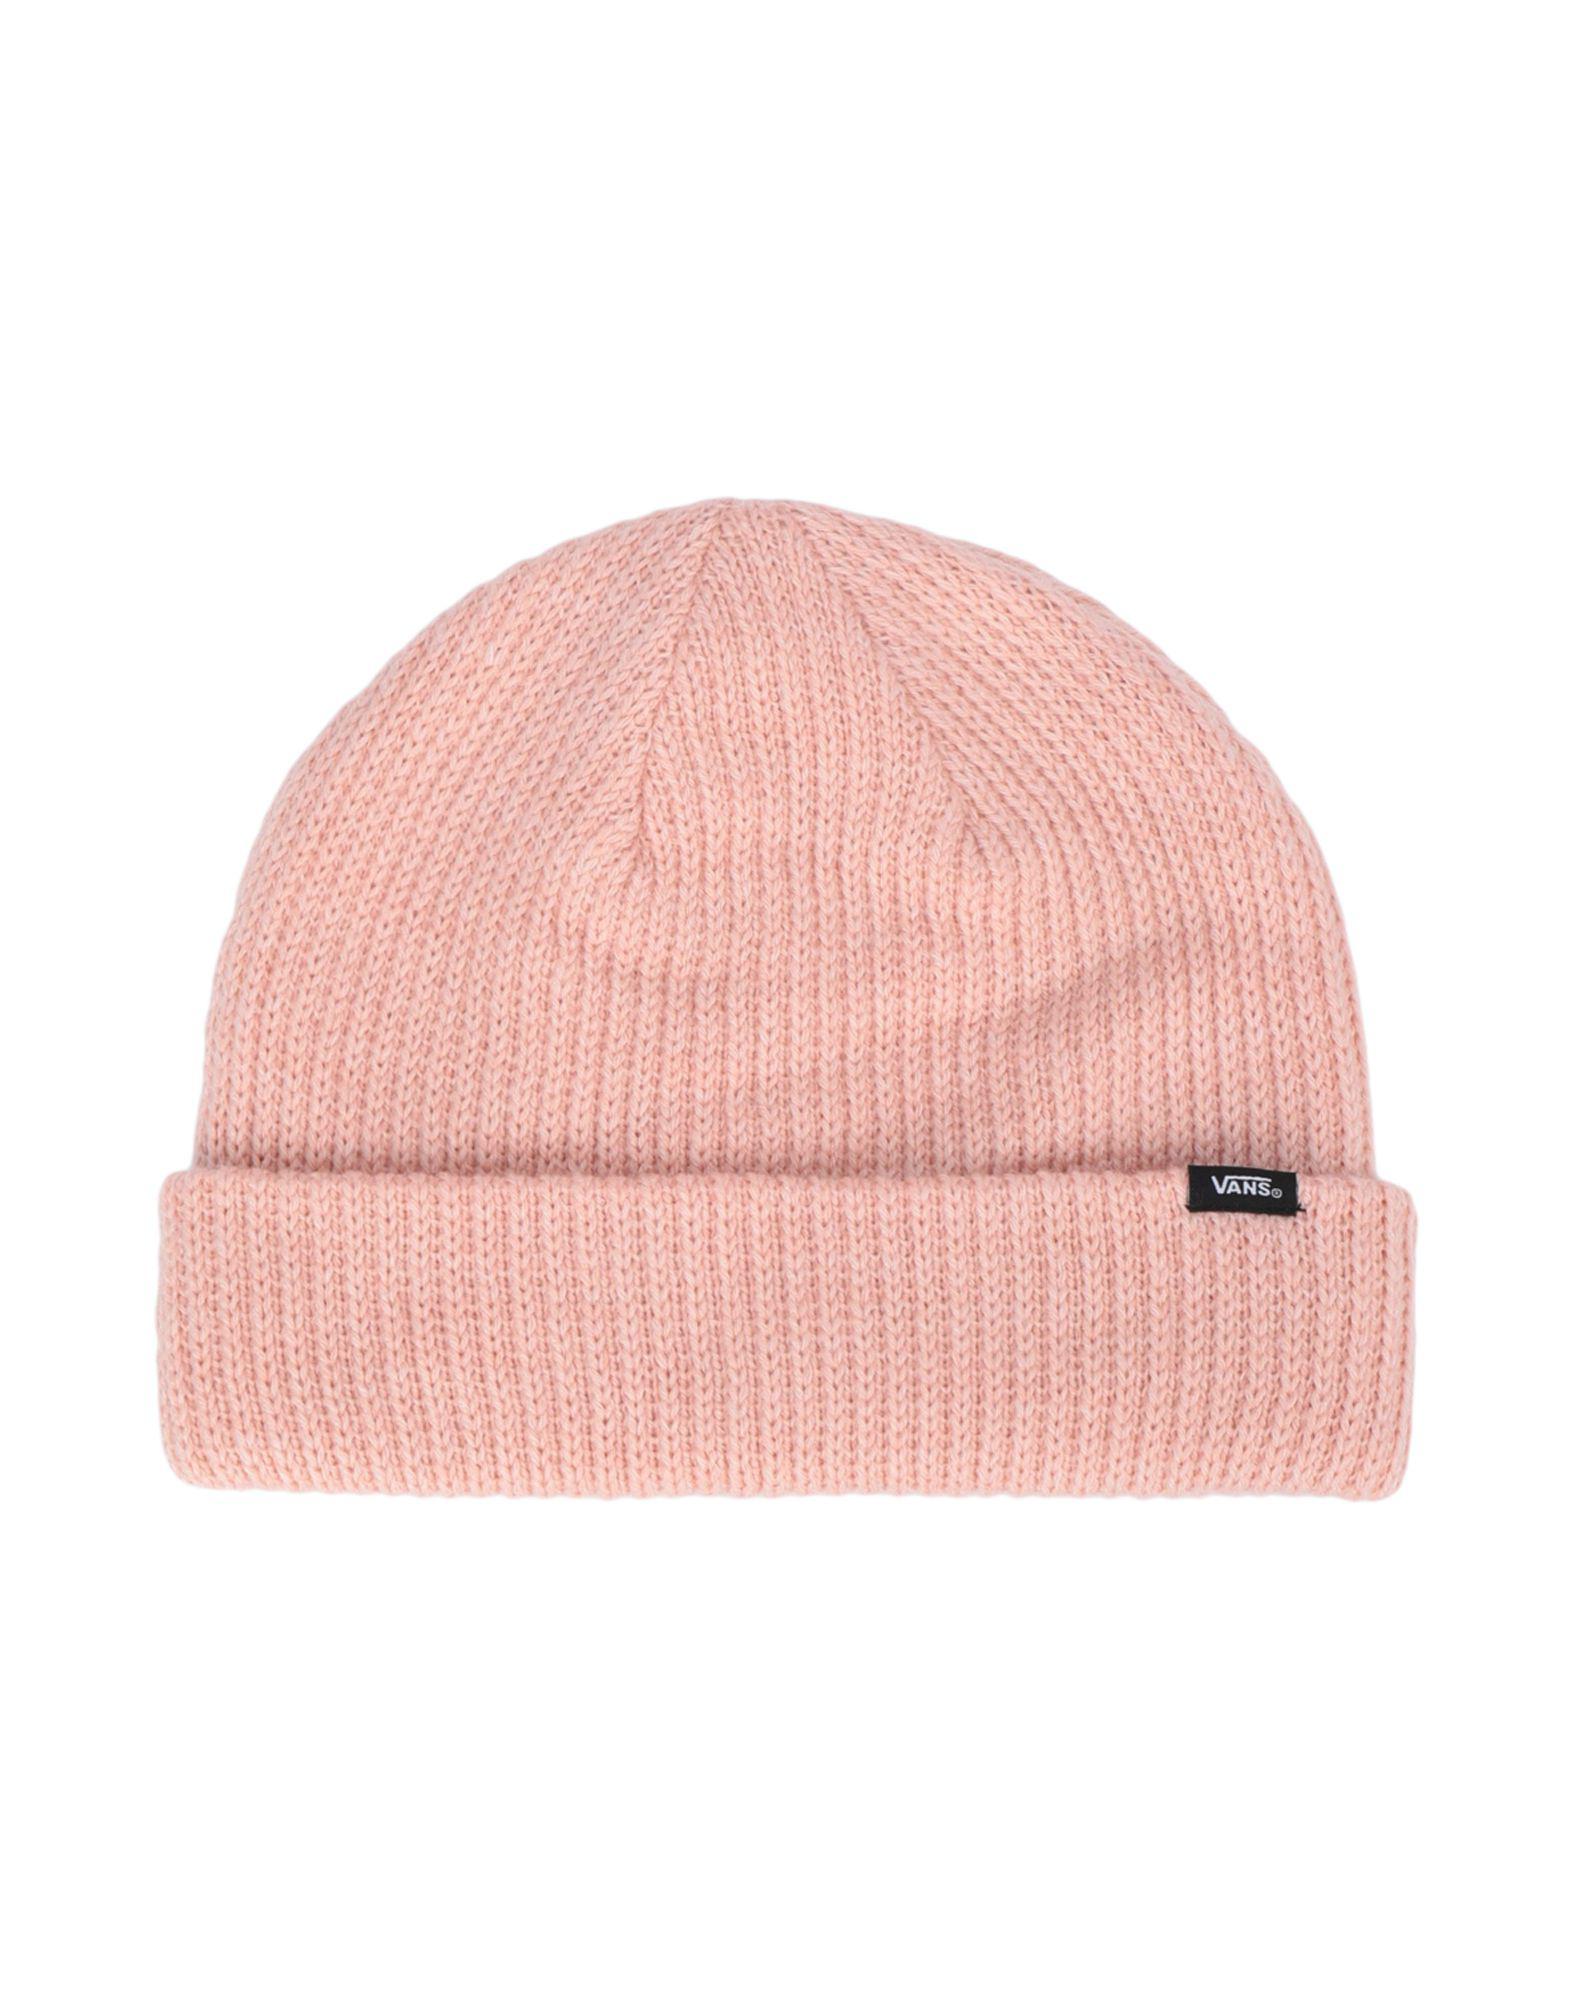 Vans Hat in Light Pink (Pink) - Lyst